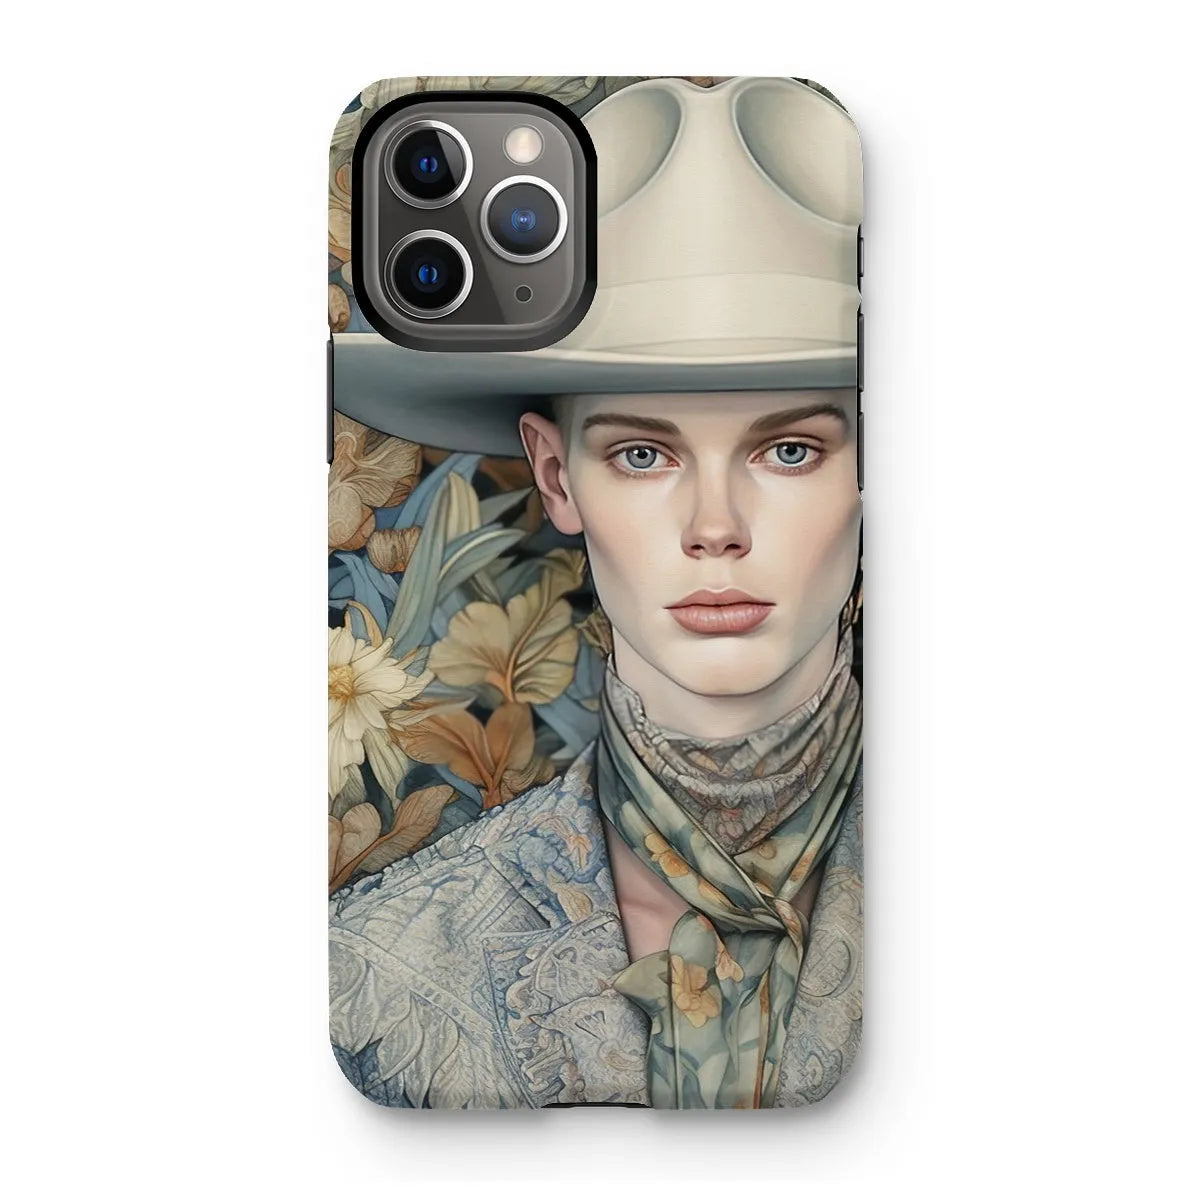 Jasper - Dandy Twink Cowboy Aesthetic Art Phone Case - Iphone 11 Pro / Matte - Mobile Phone Cases - Aesthetic Art